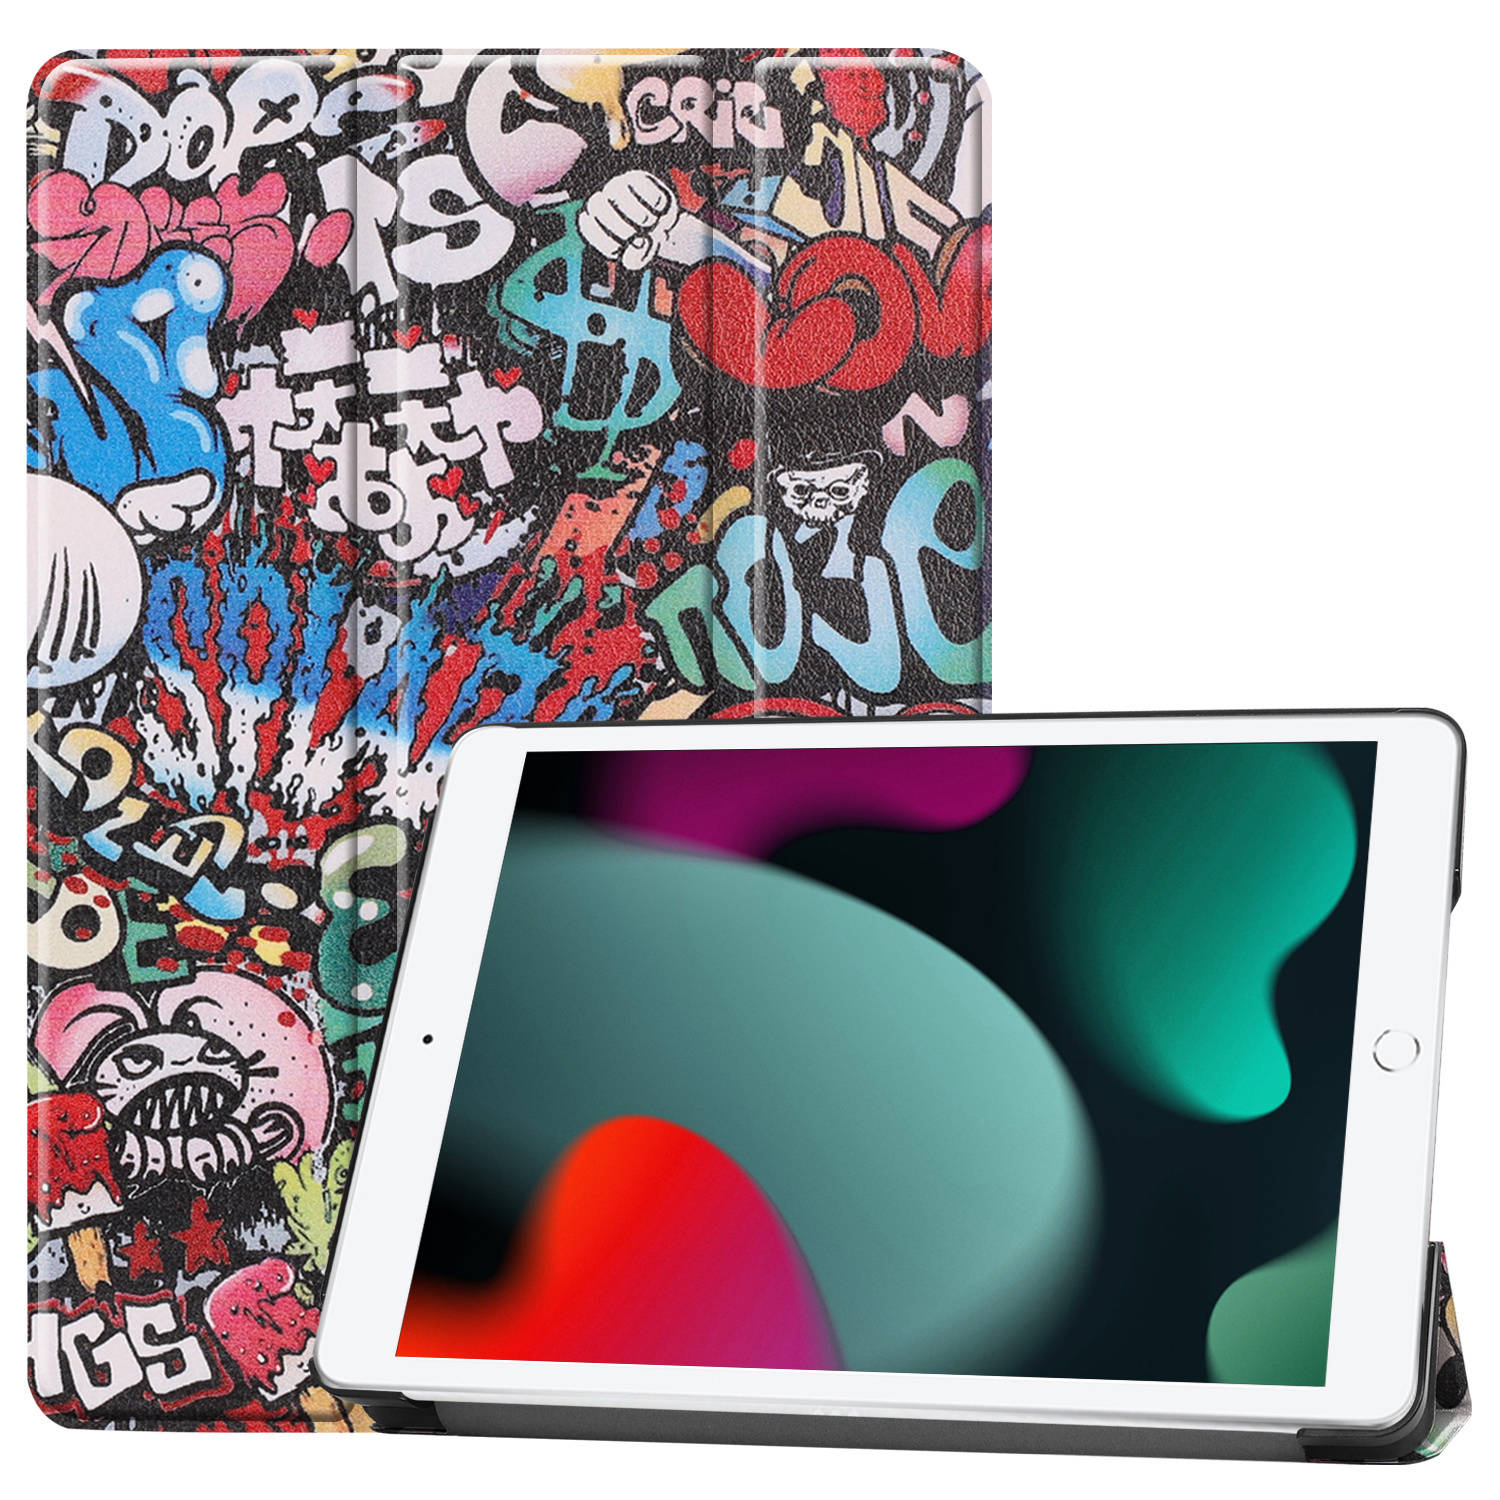 Basey iPad 10.2 2020 Hoes Book Case Hoesje - iPad 10.2 2020 Hoesje Hard Cover Case Hoes - Graffity